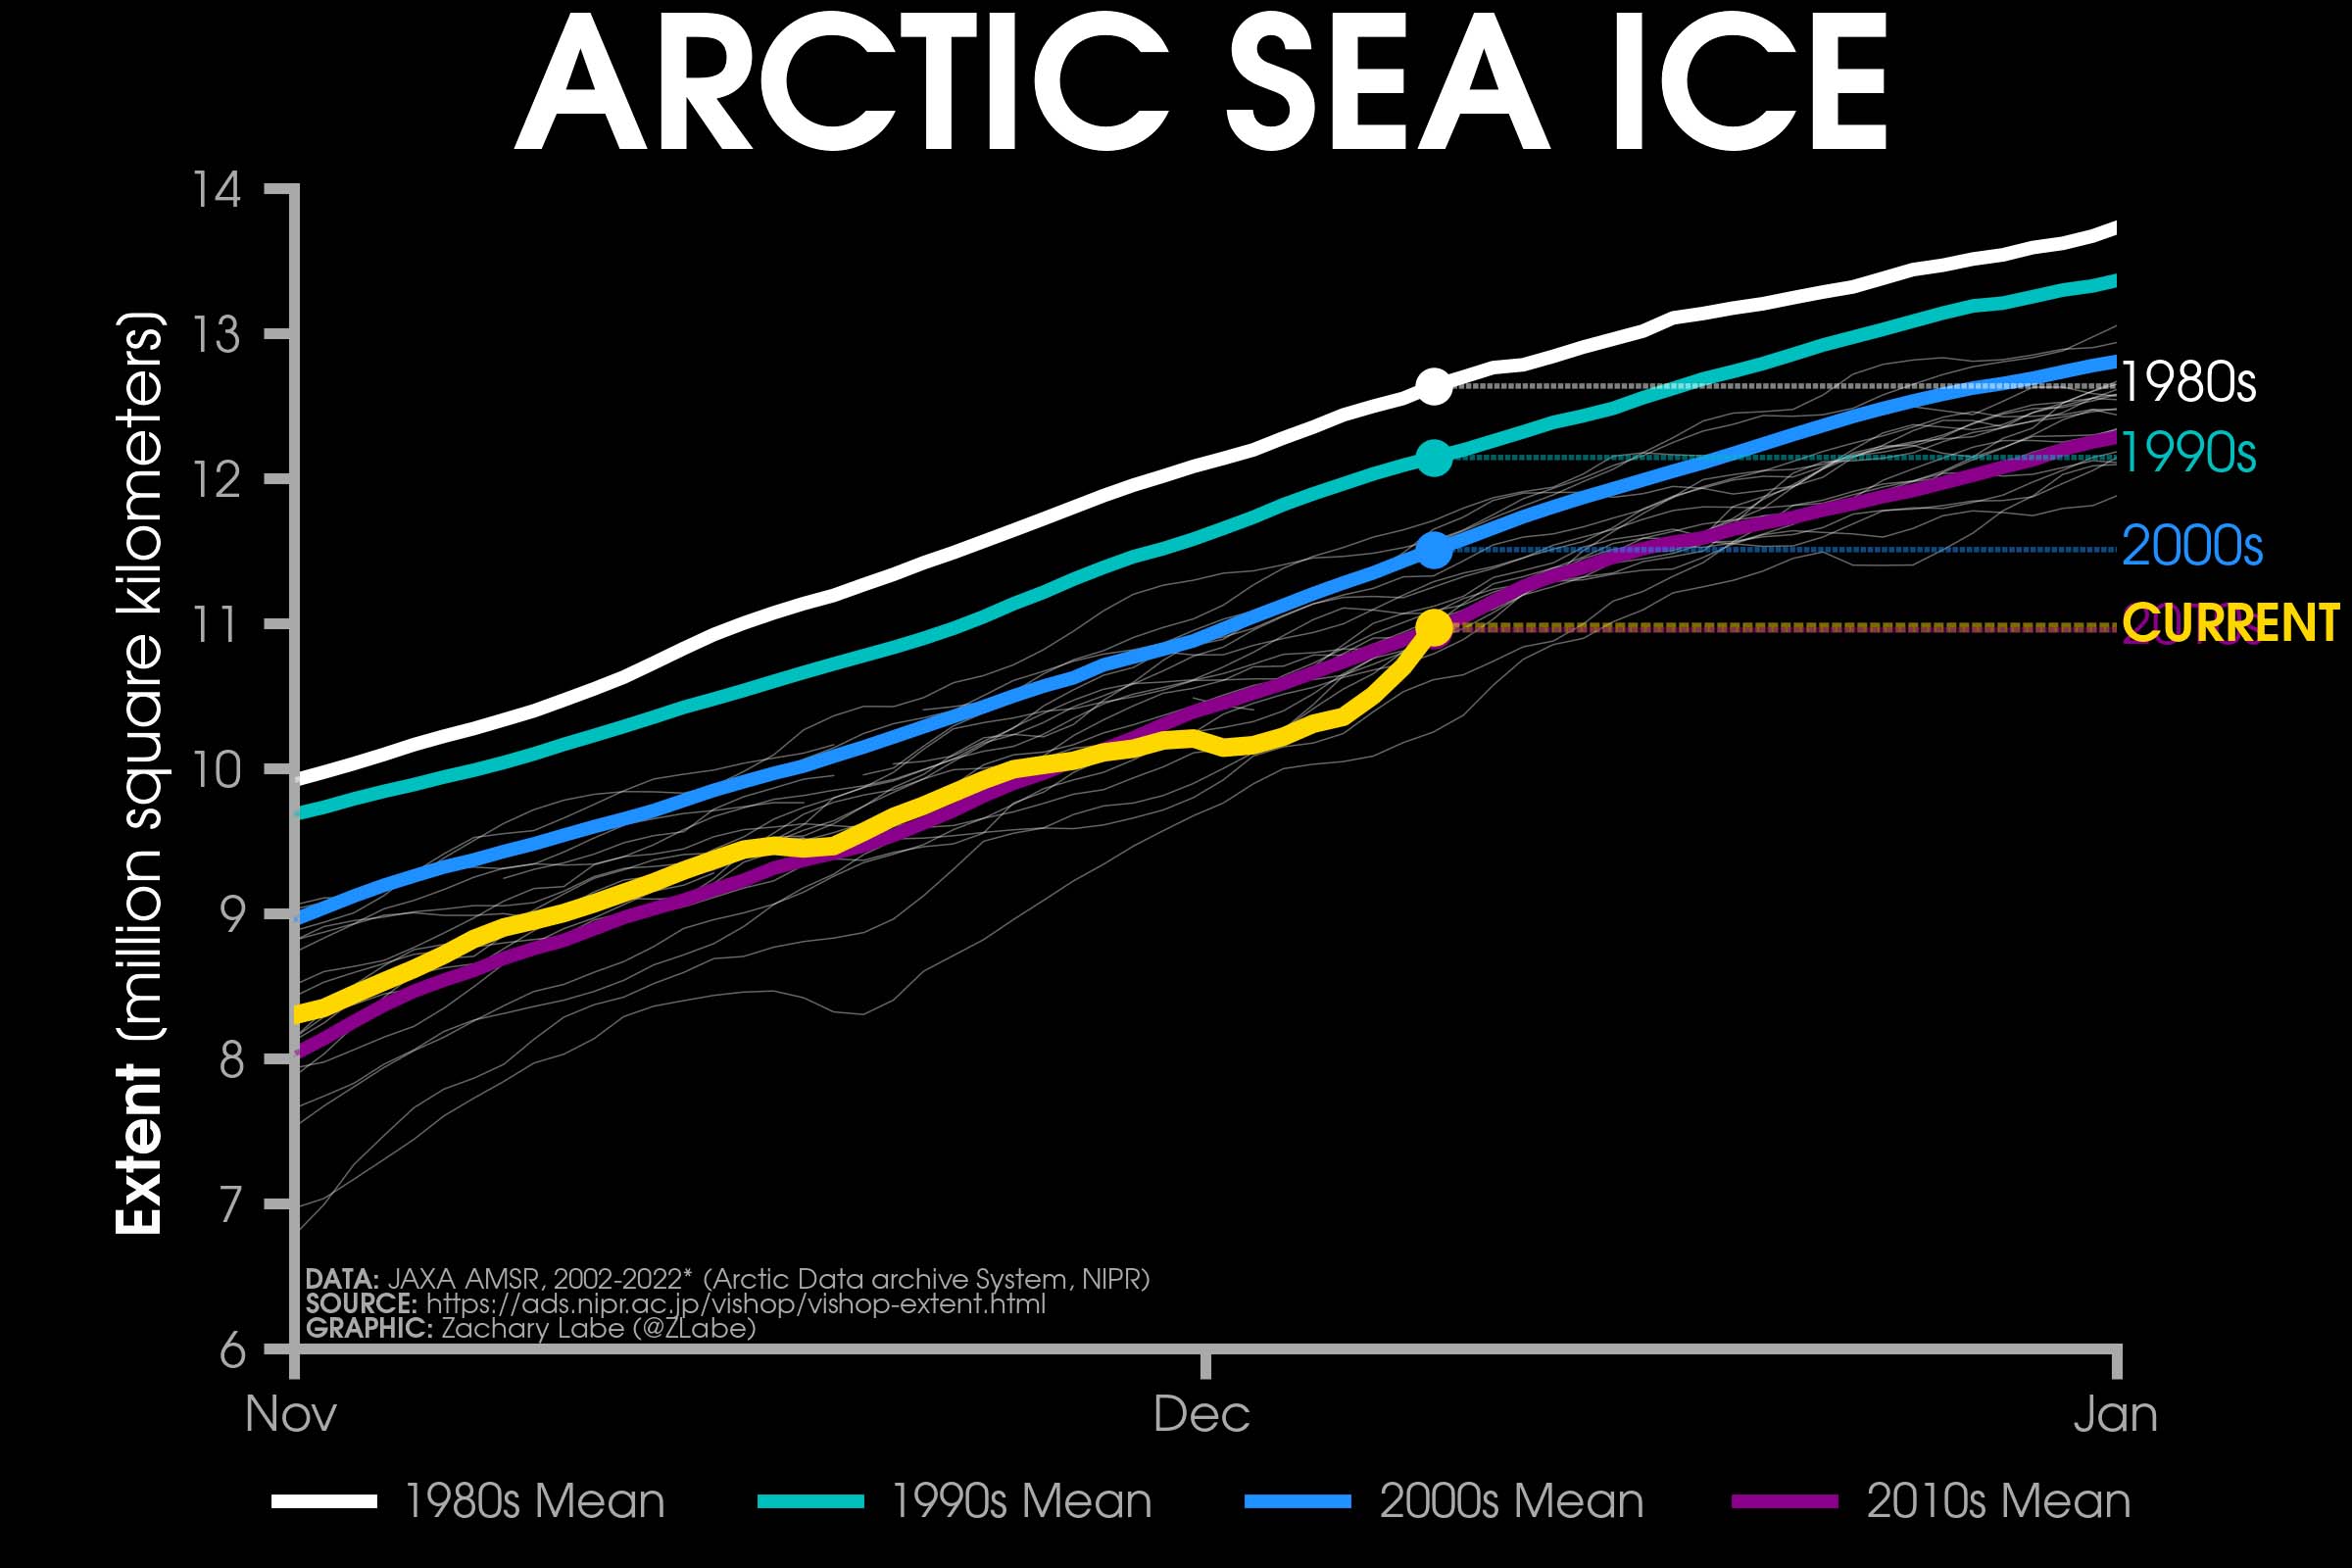 Arctic-sea-ice-extent-growth-winter-season-antarctica-abrupt-decline-sf-plot-